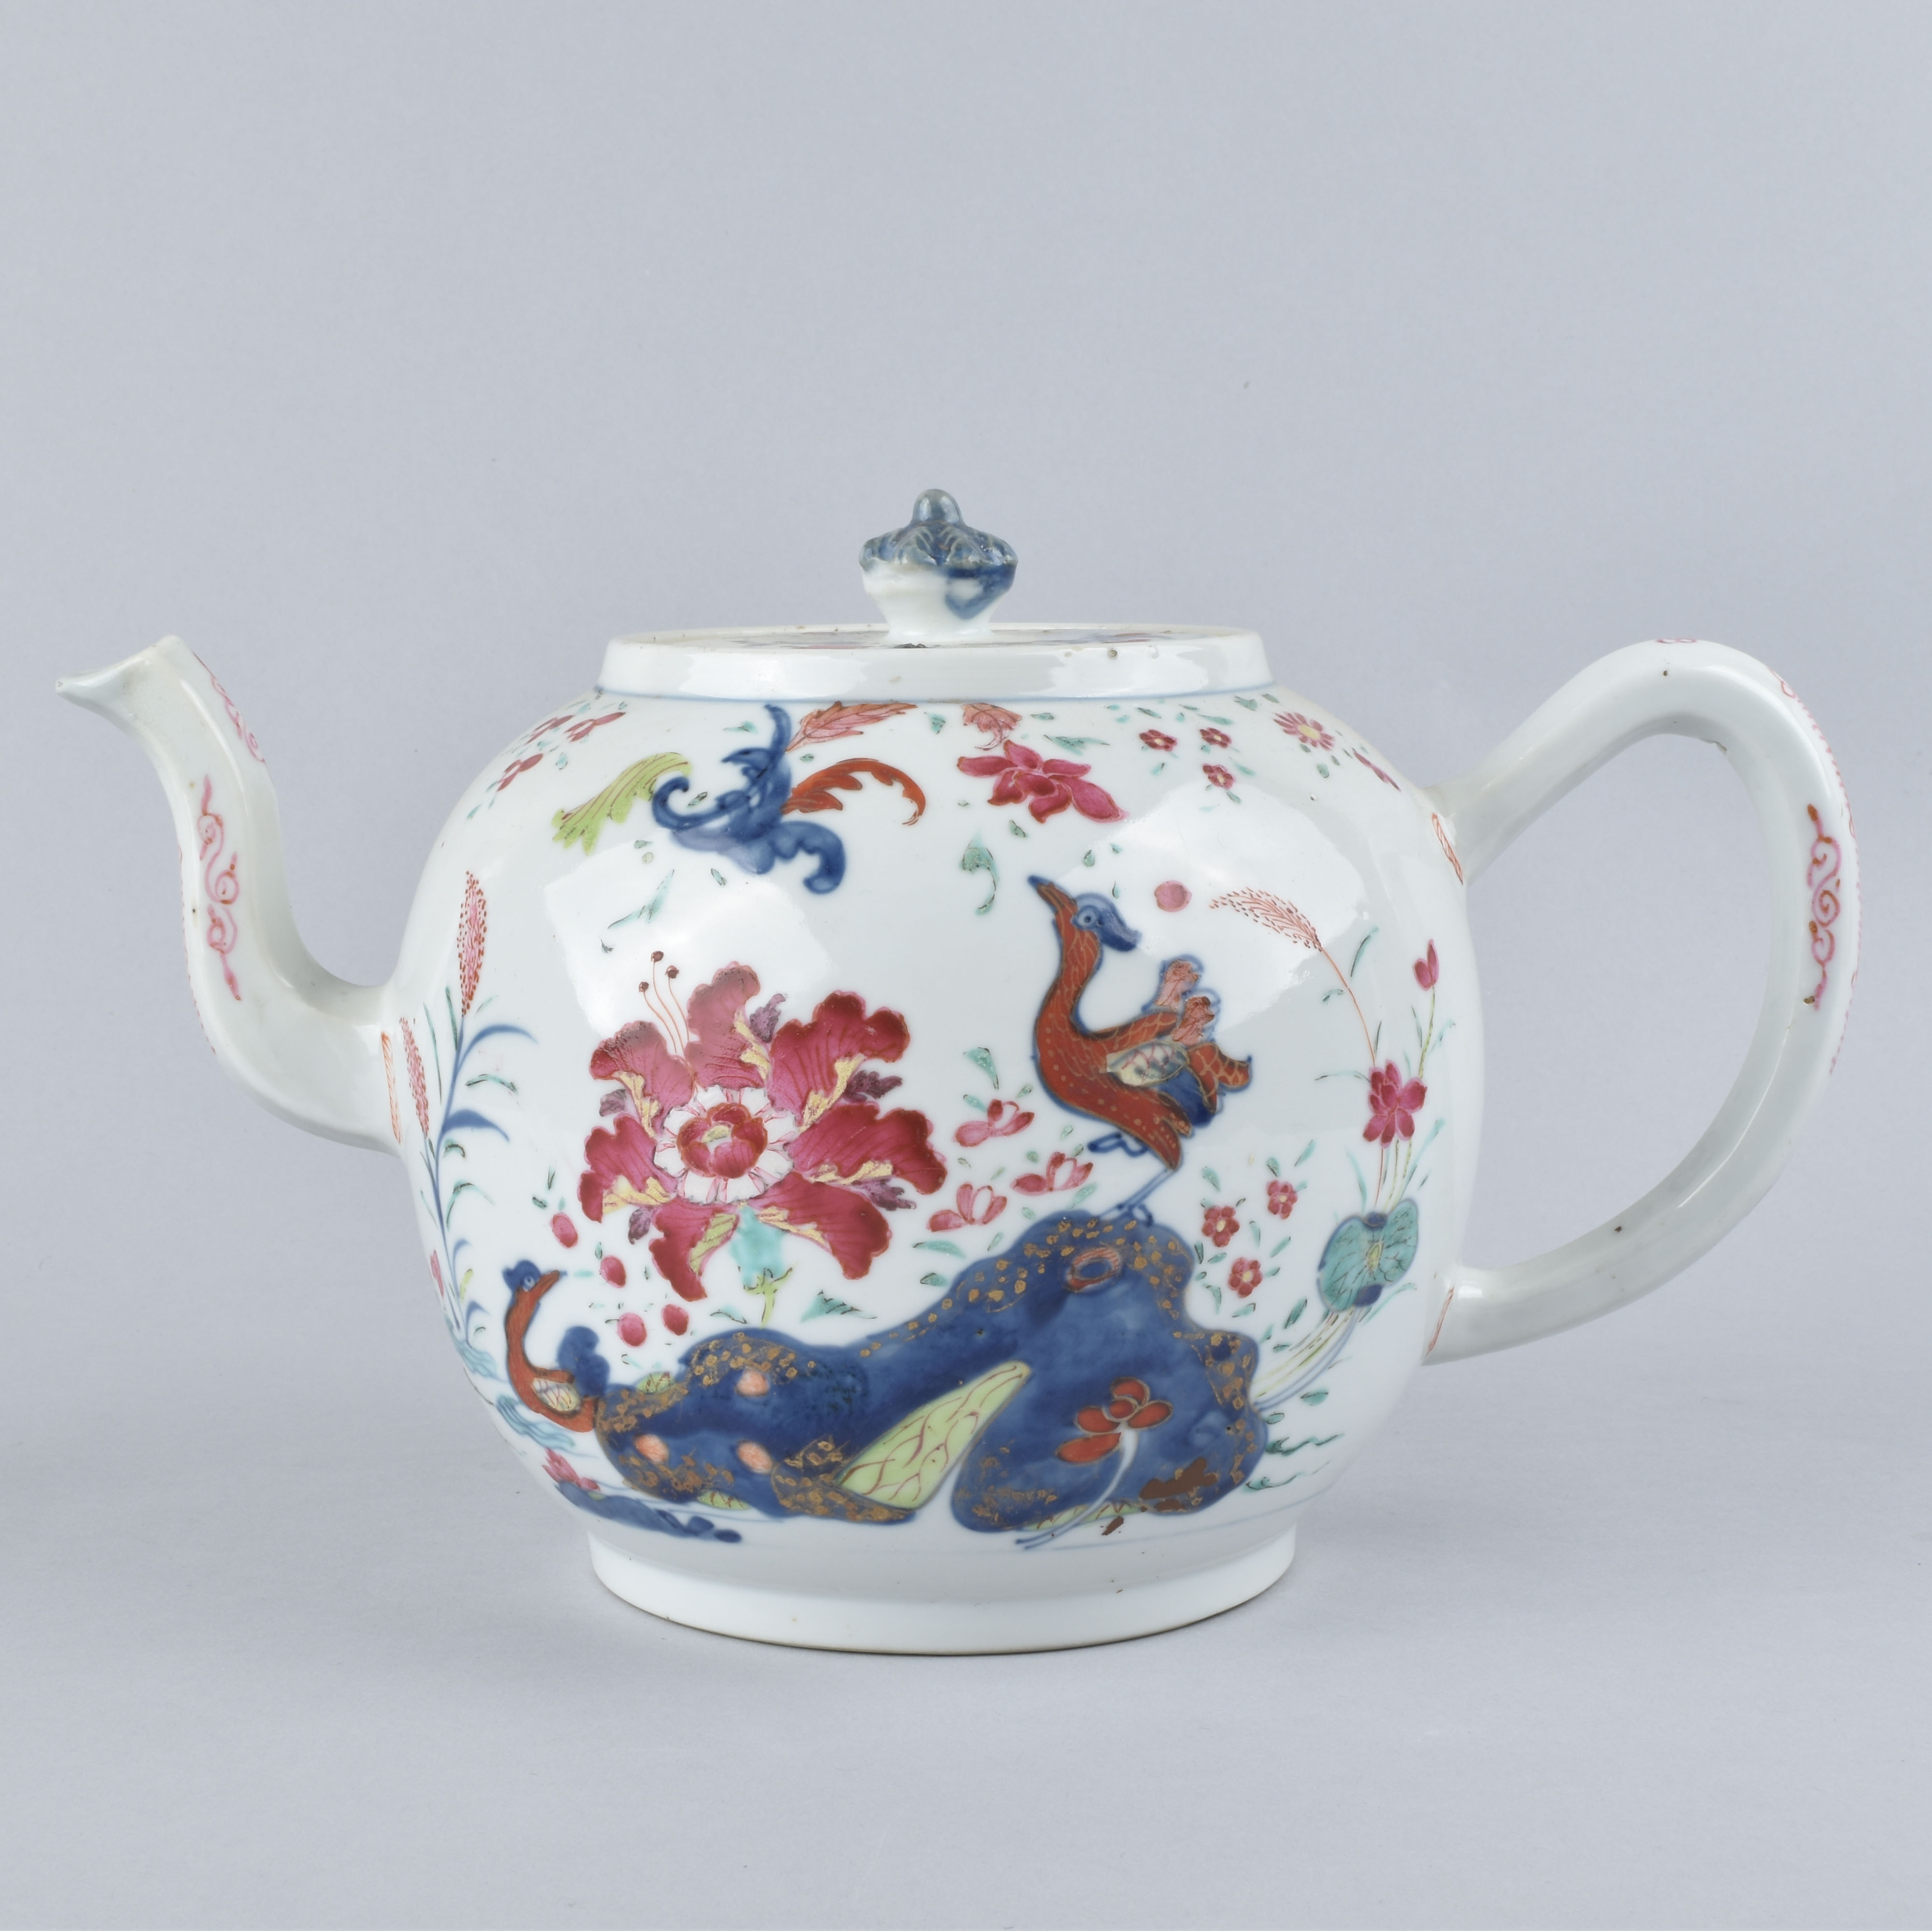 Porcelaine Qianlong (1735-1795), circa 1750-60, Chine